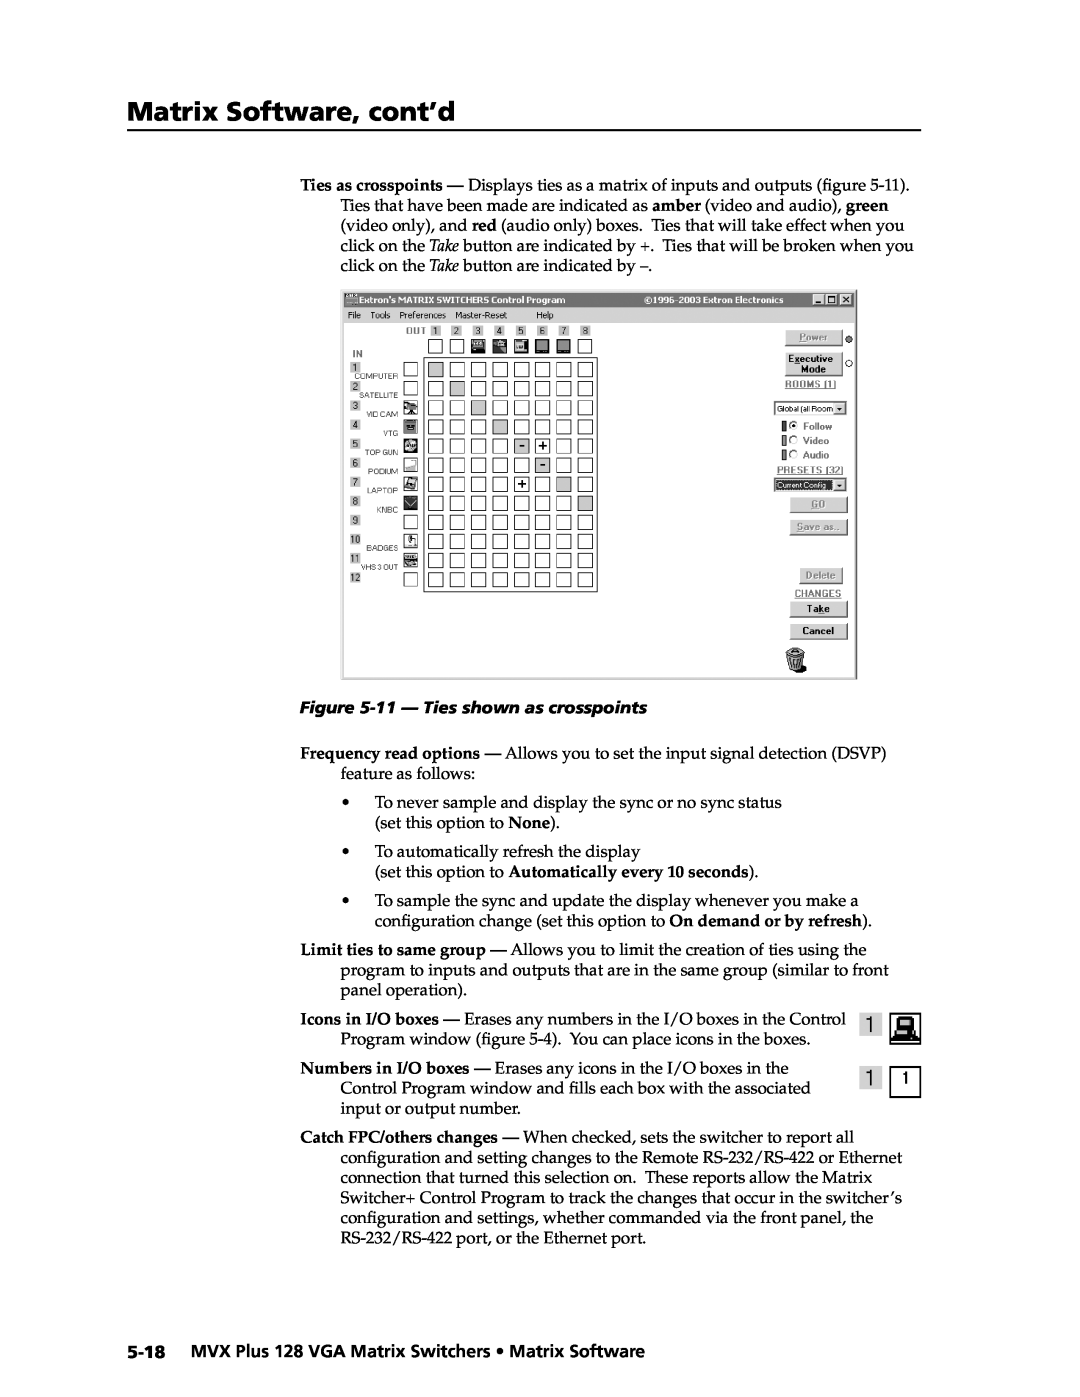 Extron electronic MVX PLUS 128 manual Matrix Software, cont’d, 11 - Ties shown as crosspoints 